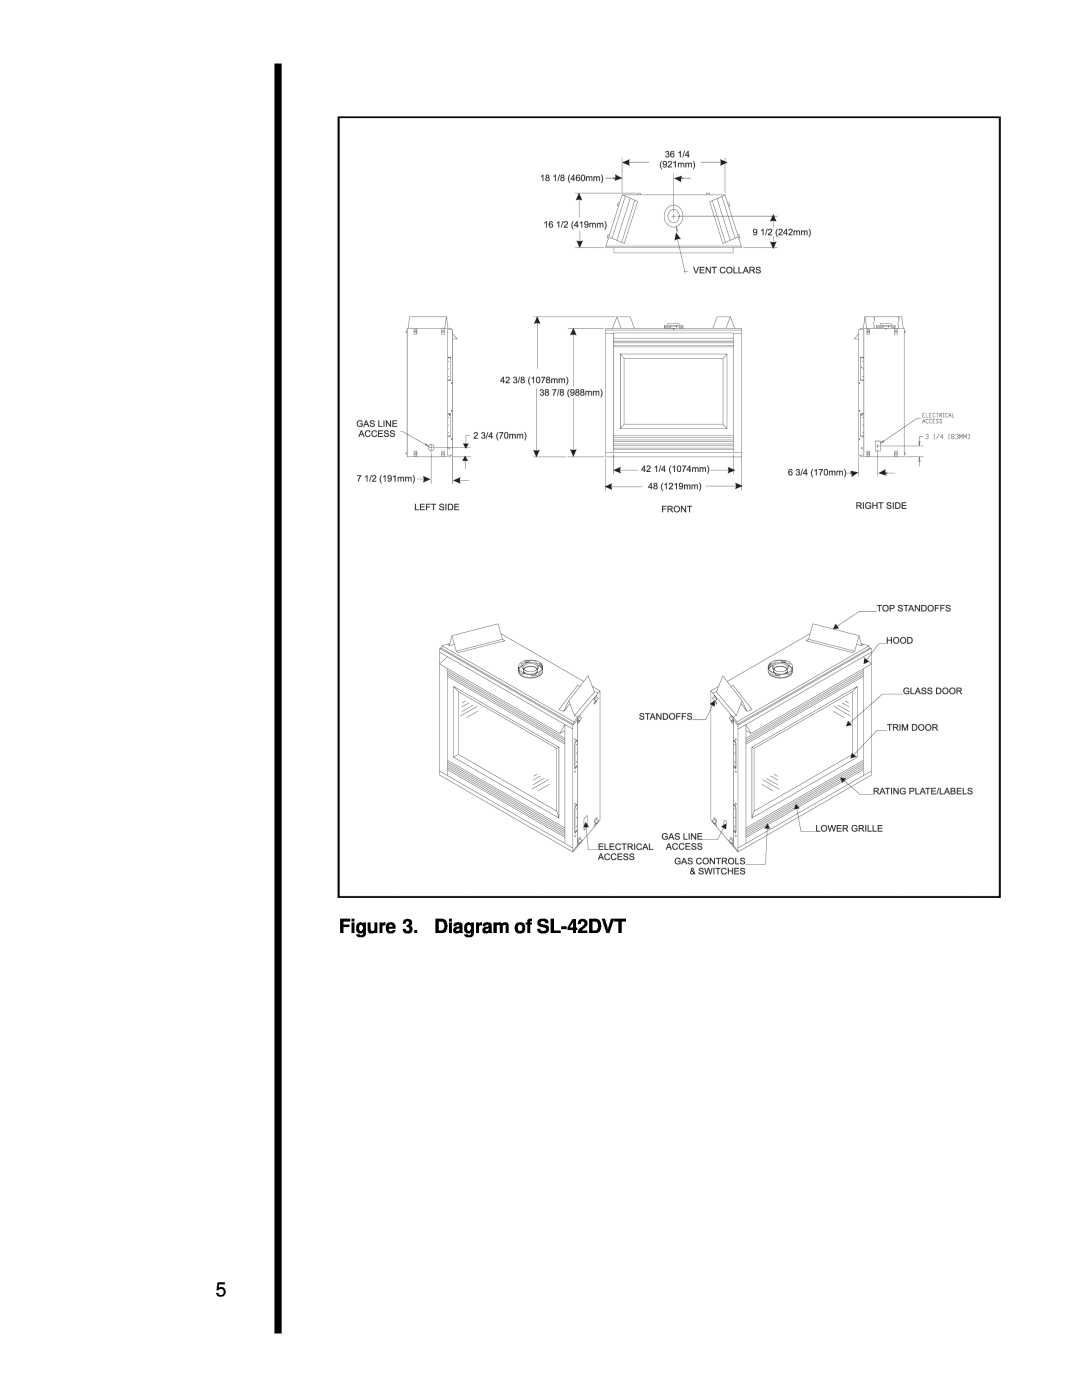 Heat & Glo LifeStyle 6000 XLT, 8000 DVTFL, SL-42 DVT, 6000 ARCH, 6000 DVTFL manual Diagram of SL-42DVT 